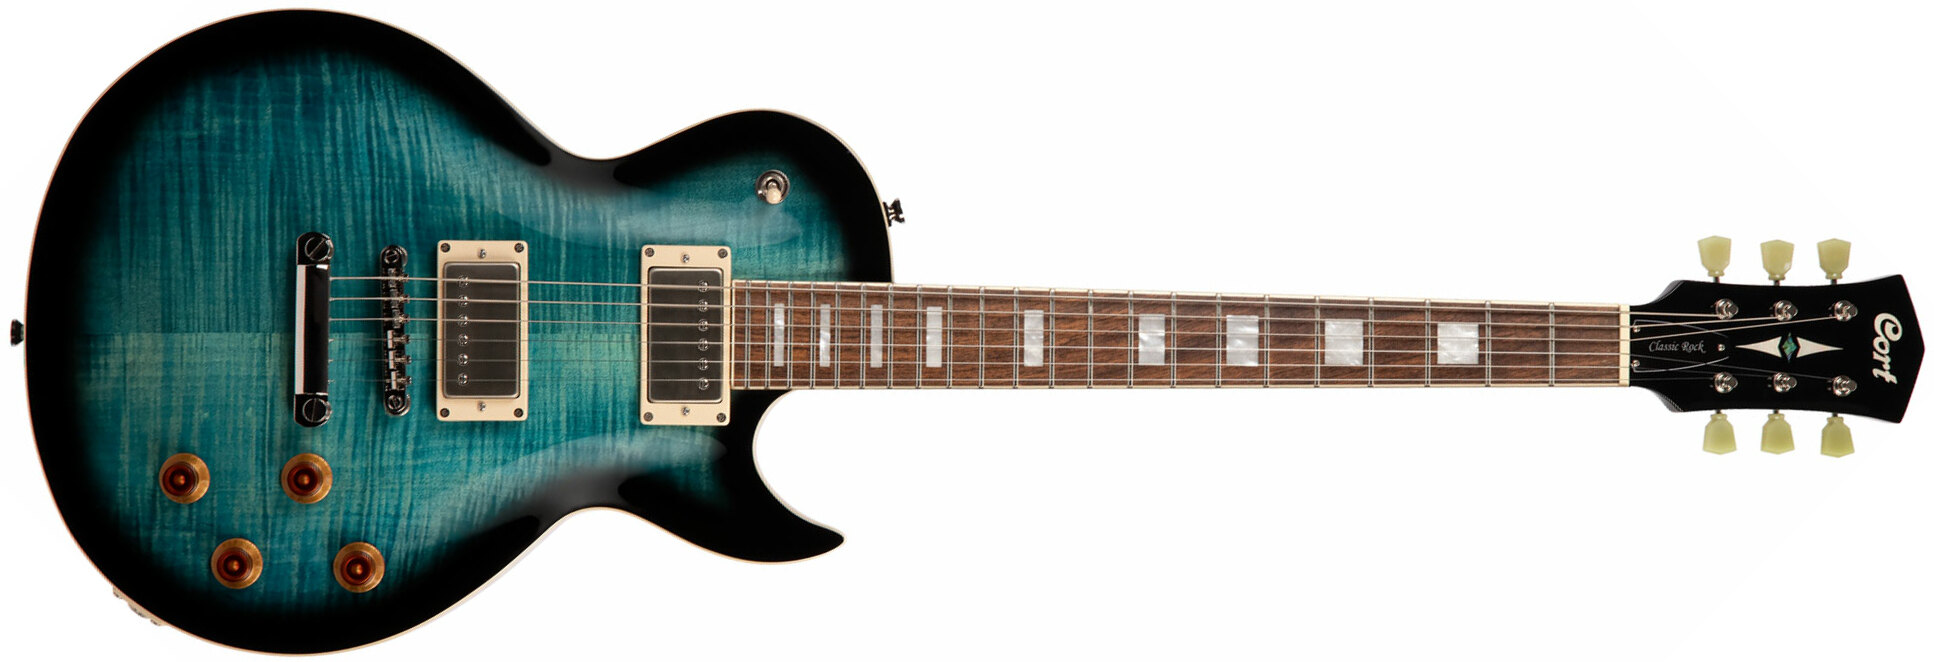 Cort Cr250 Dbb Classic Rock Ht Hh Jat - Dark Blue Burst - Guitarra eléctrica de corte único. - Main picture